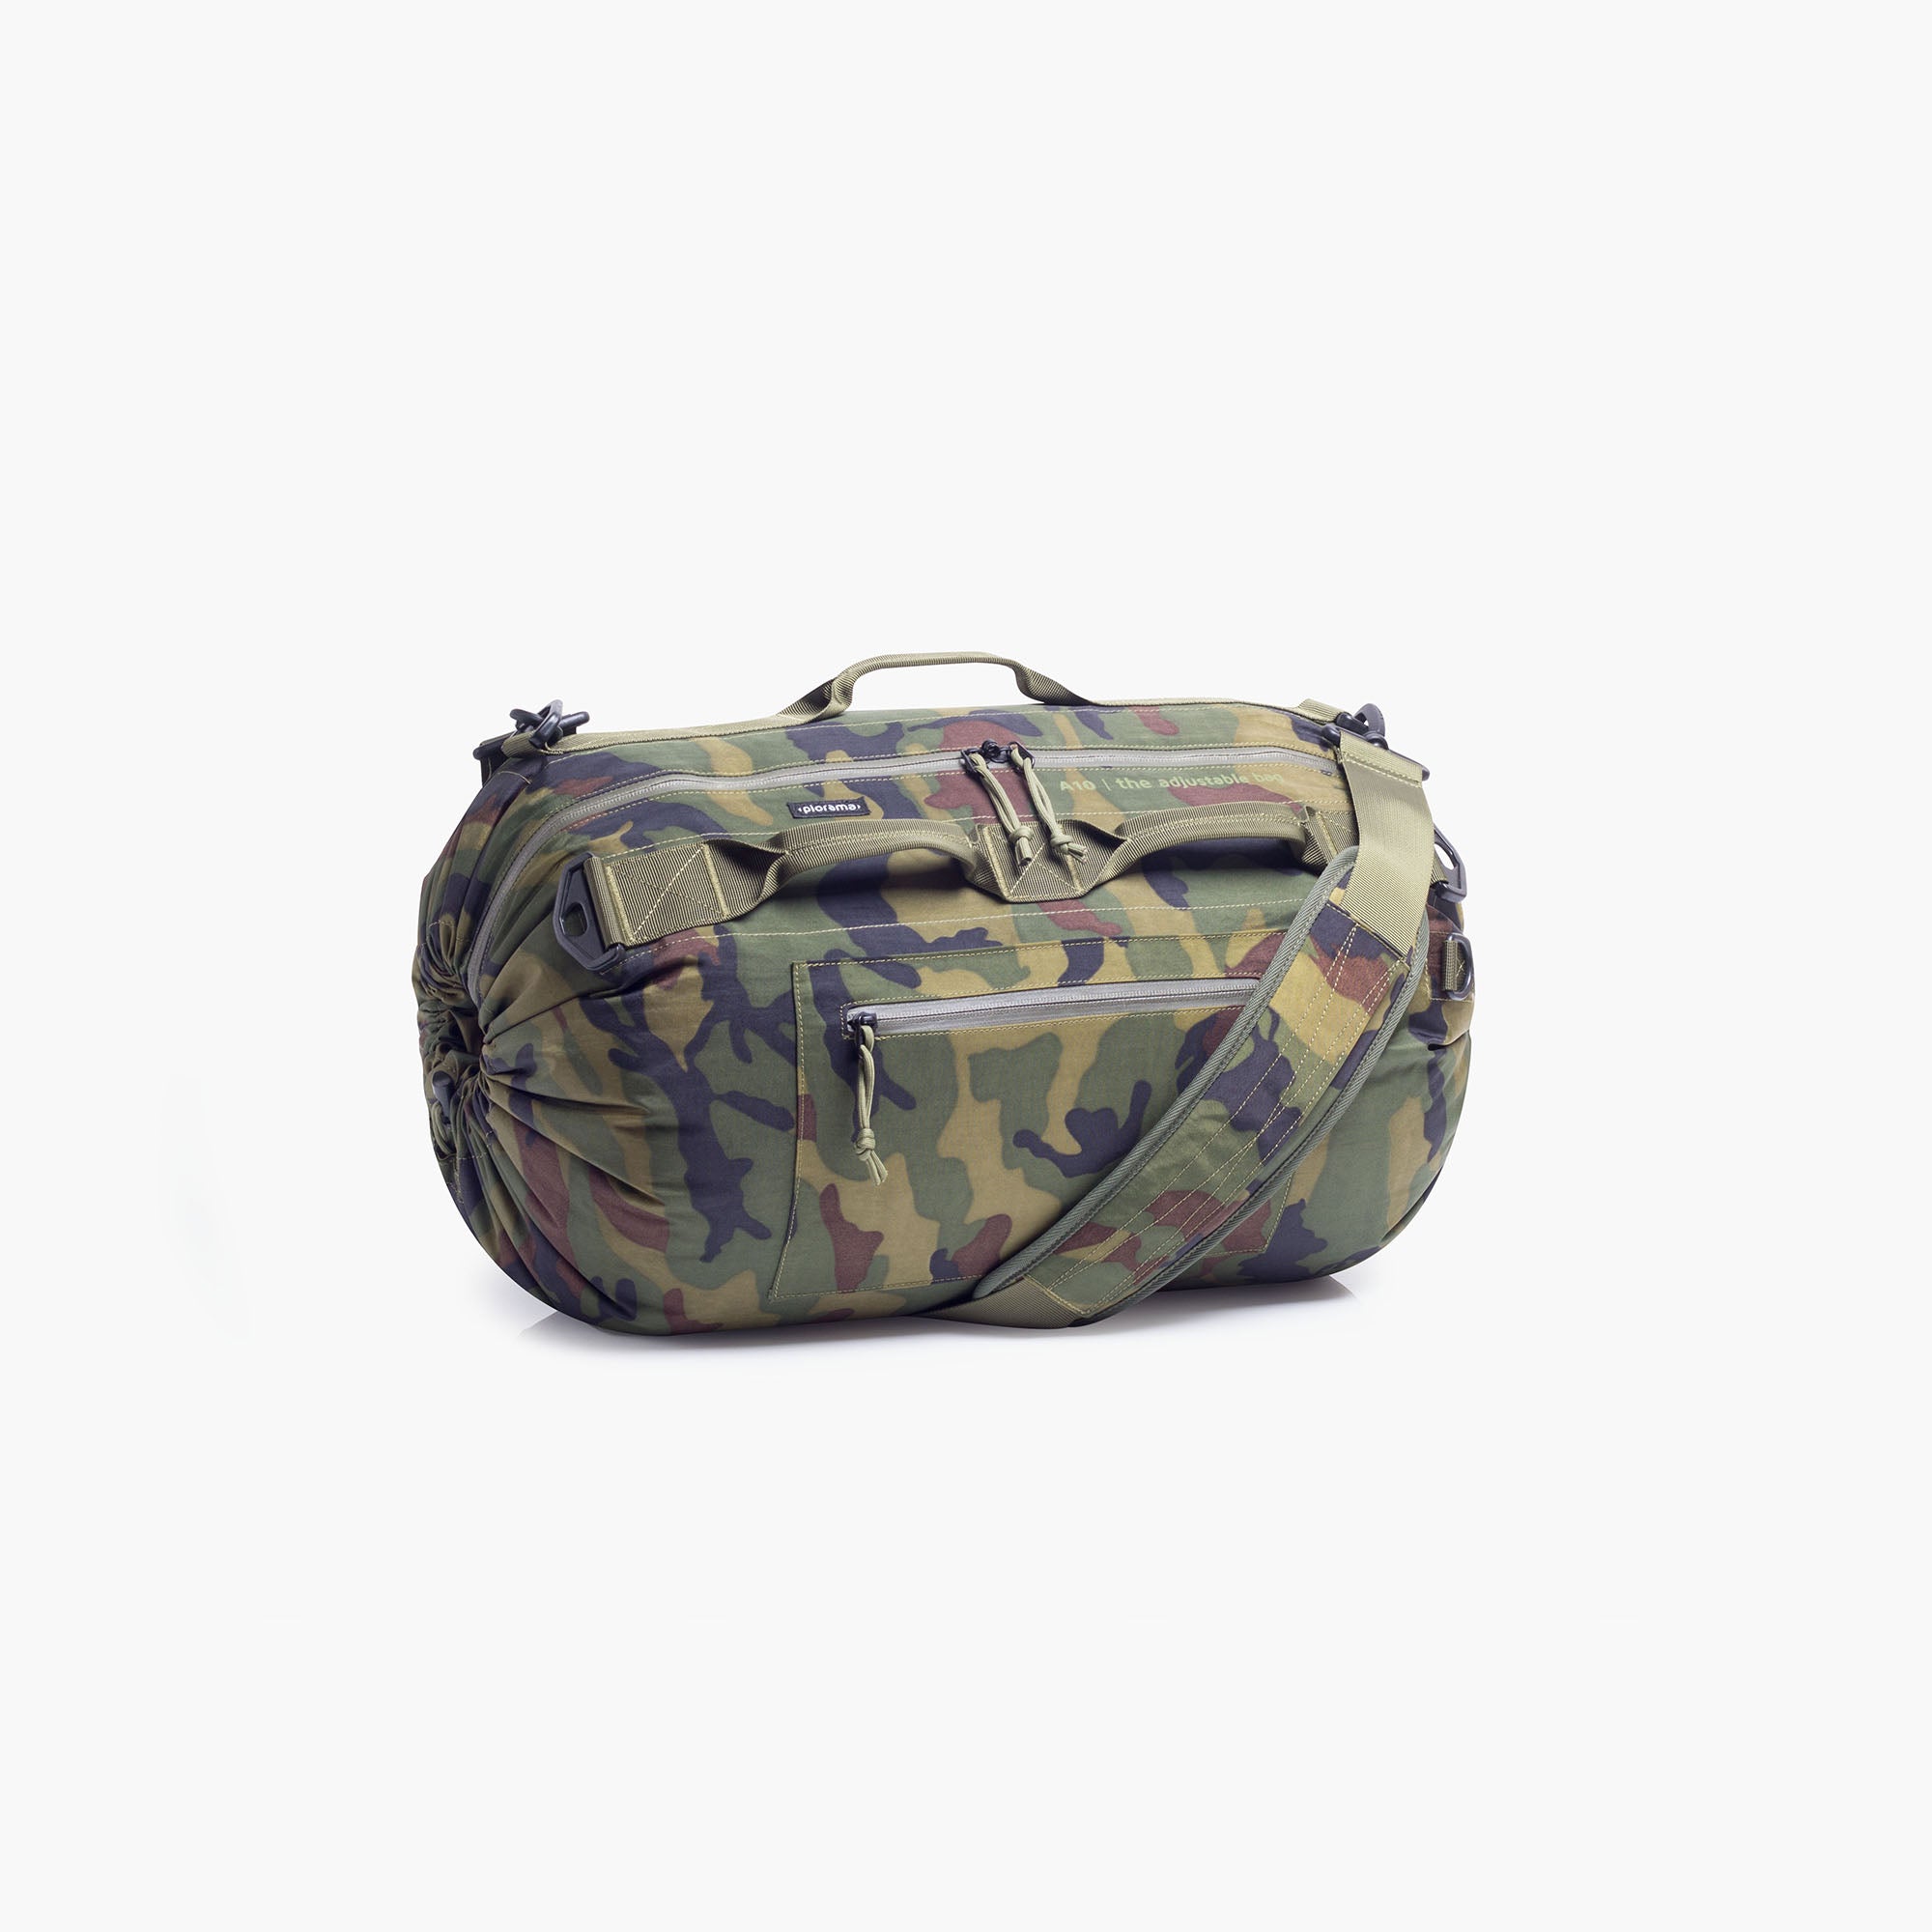 Adjustable Bag - A10 (gen2)